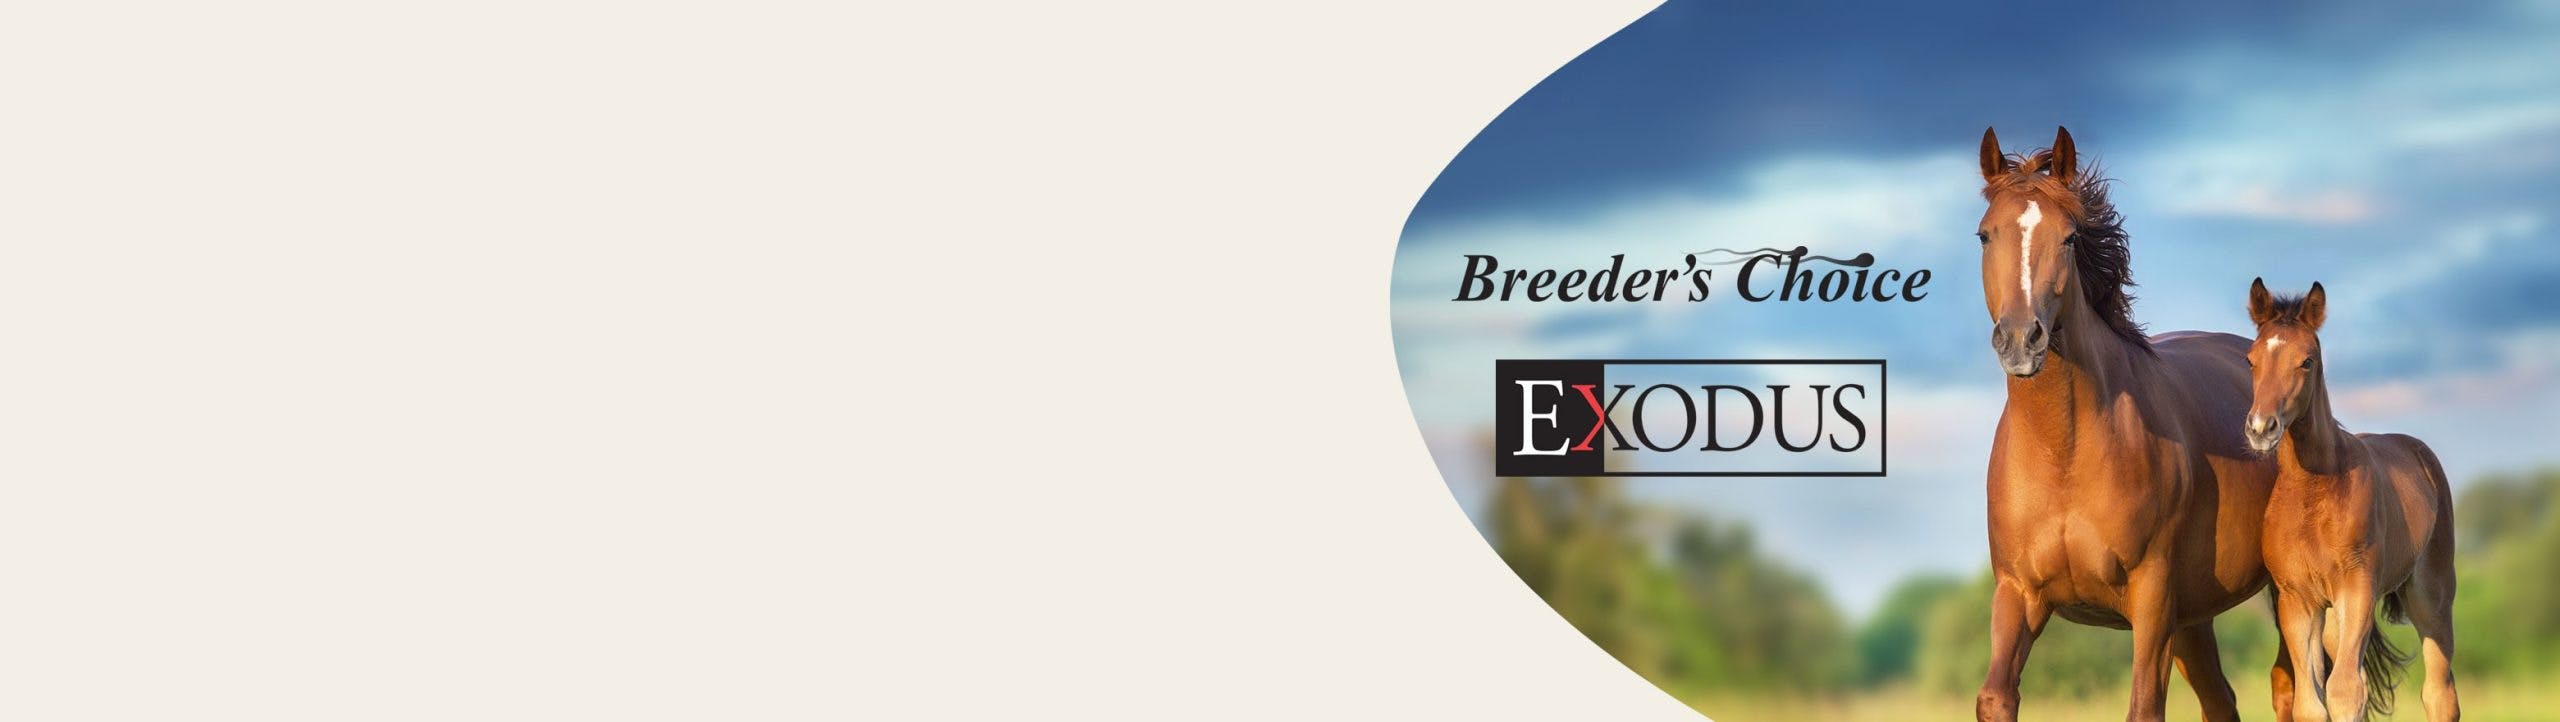 Breeders Choice and Exodus